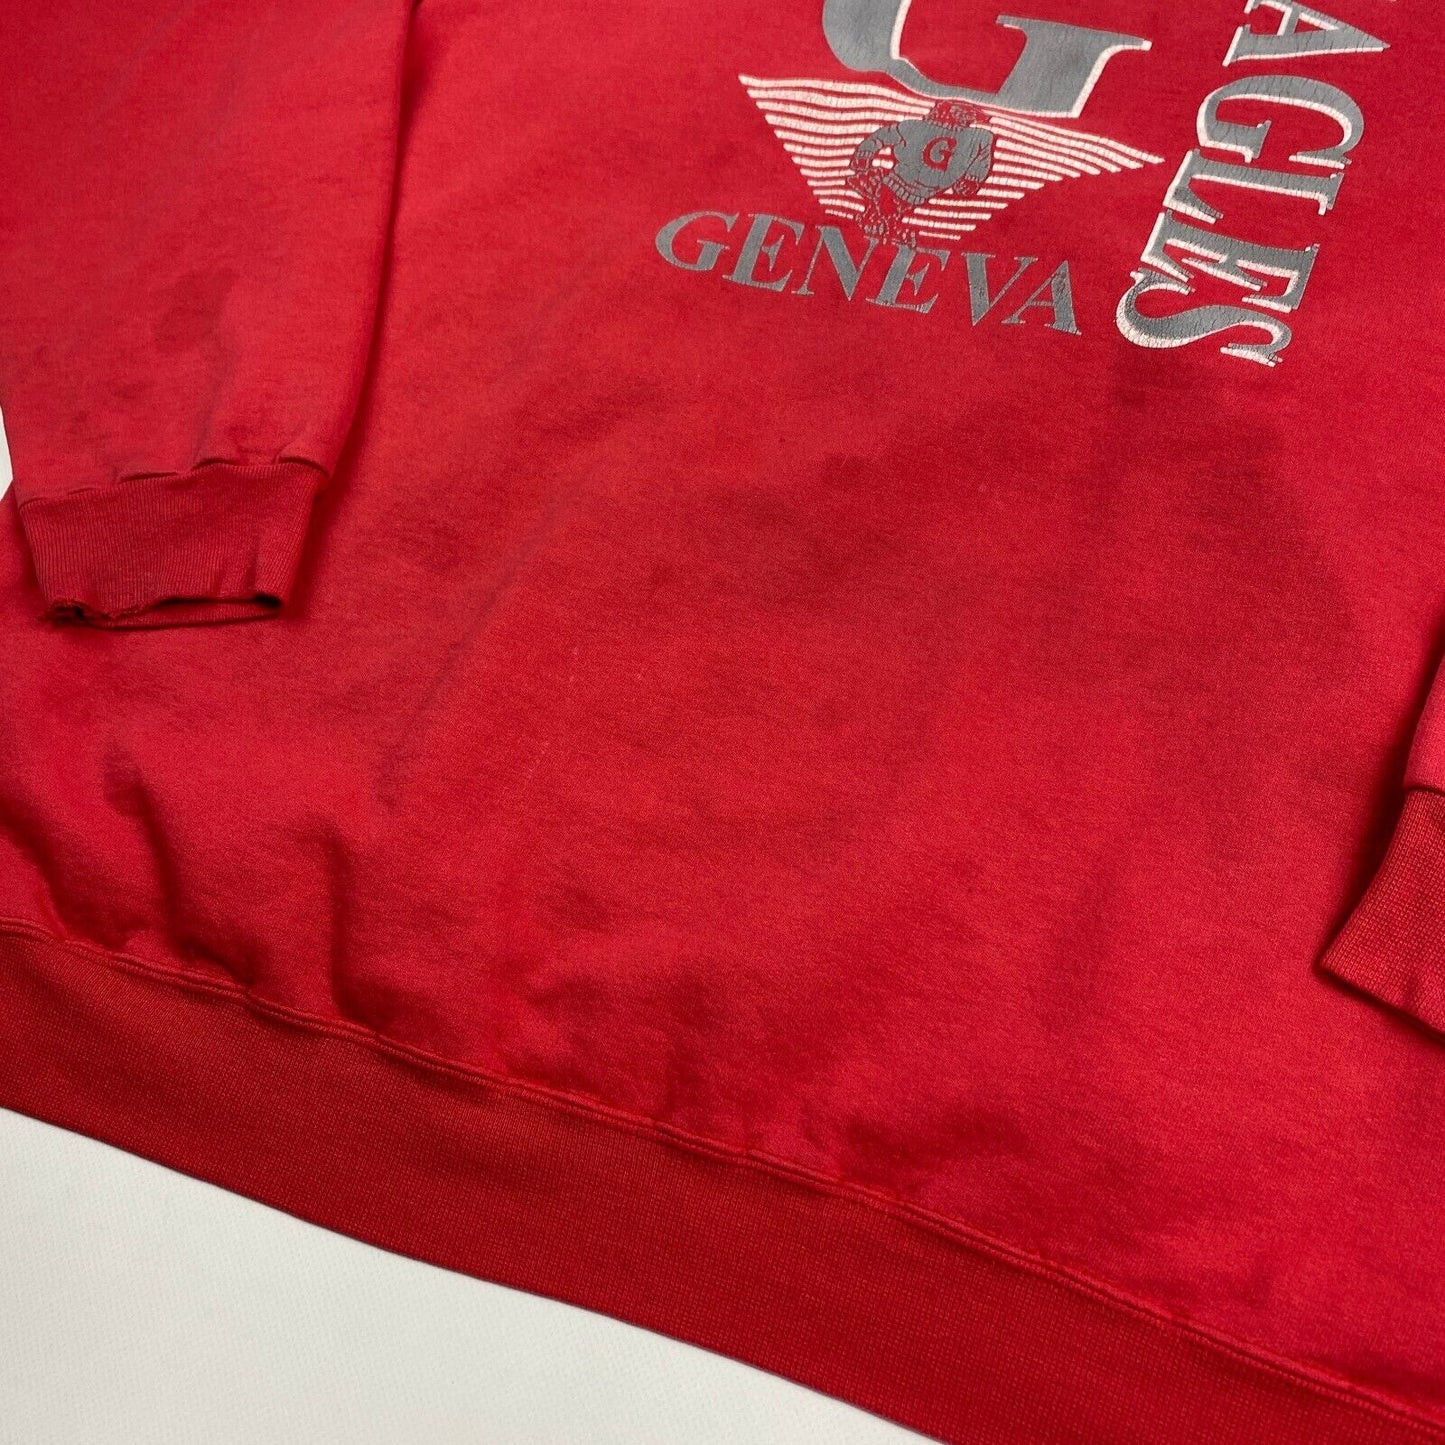 VINTAGE 90s Geneva Eagles Red Champion Crewneck Sweater sz XXL Men